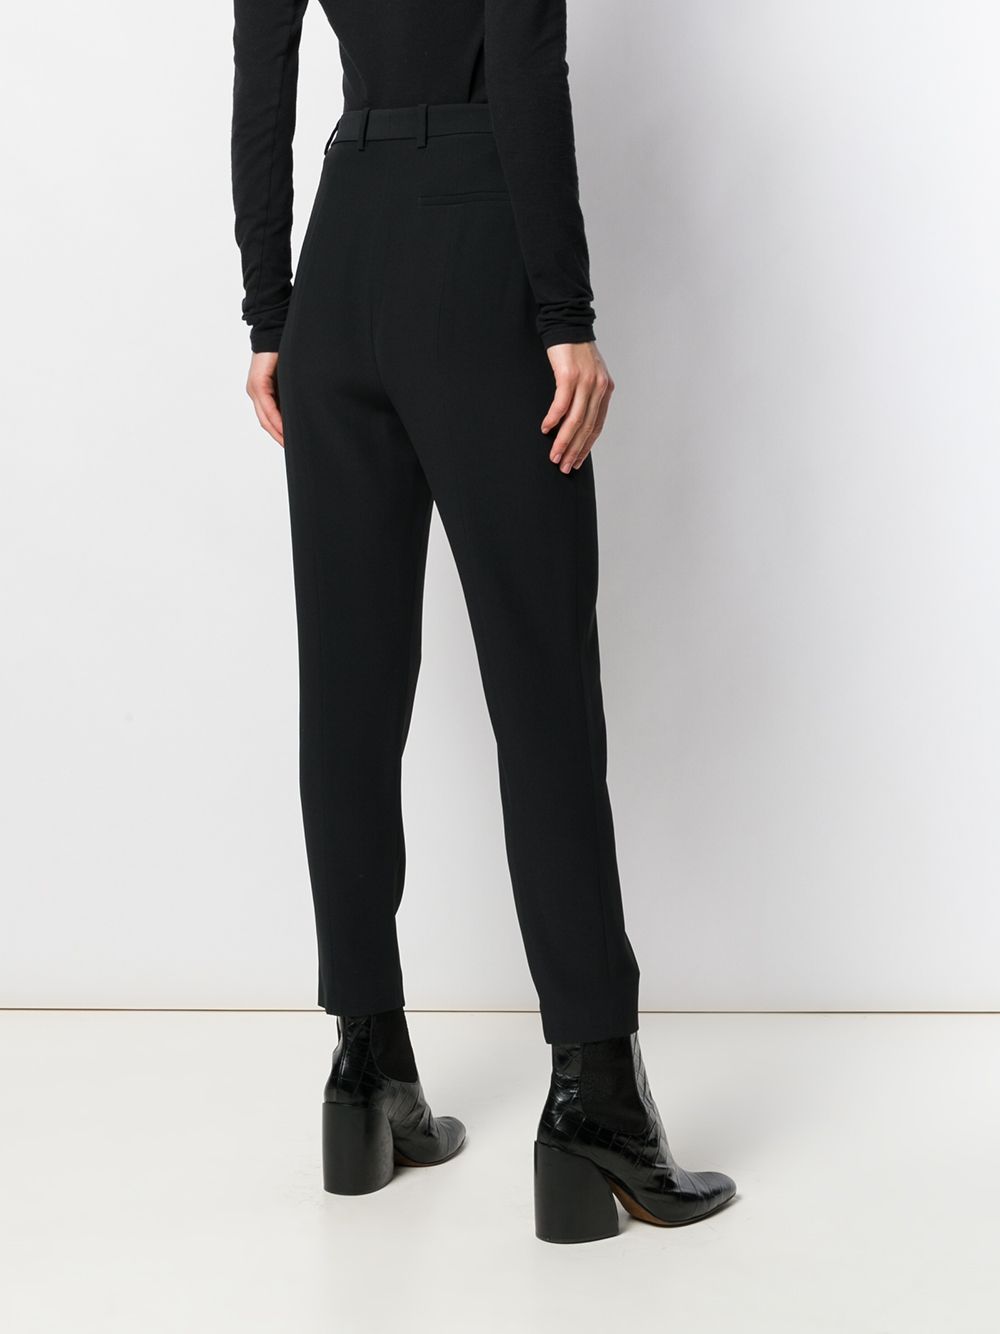 Alexander McQueen high-waisted Tailored Trousers - Farfetch